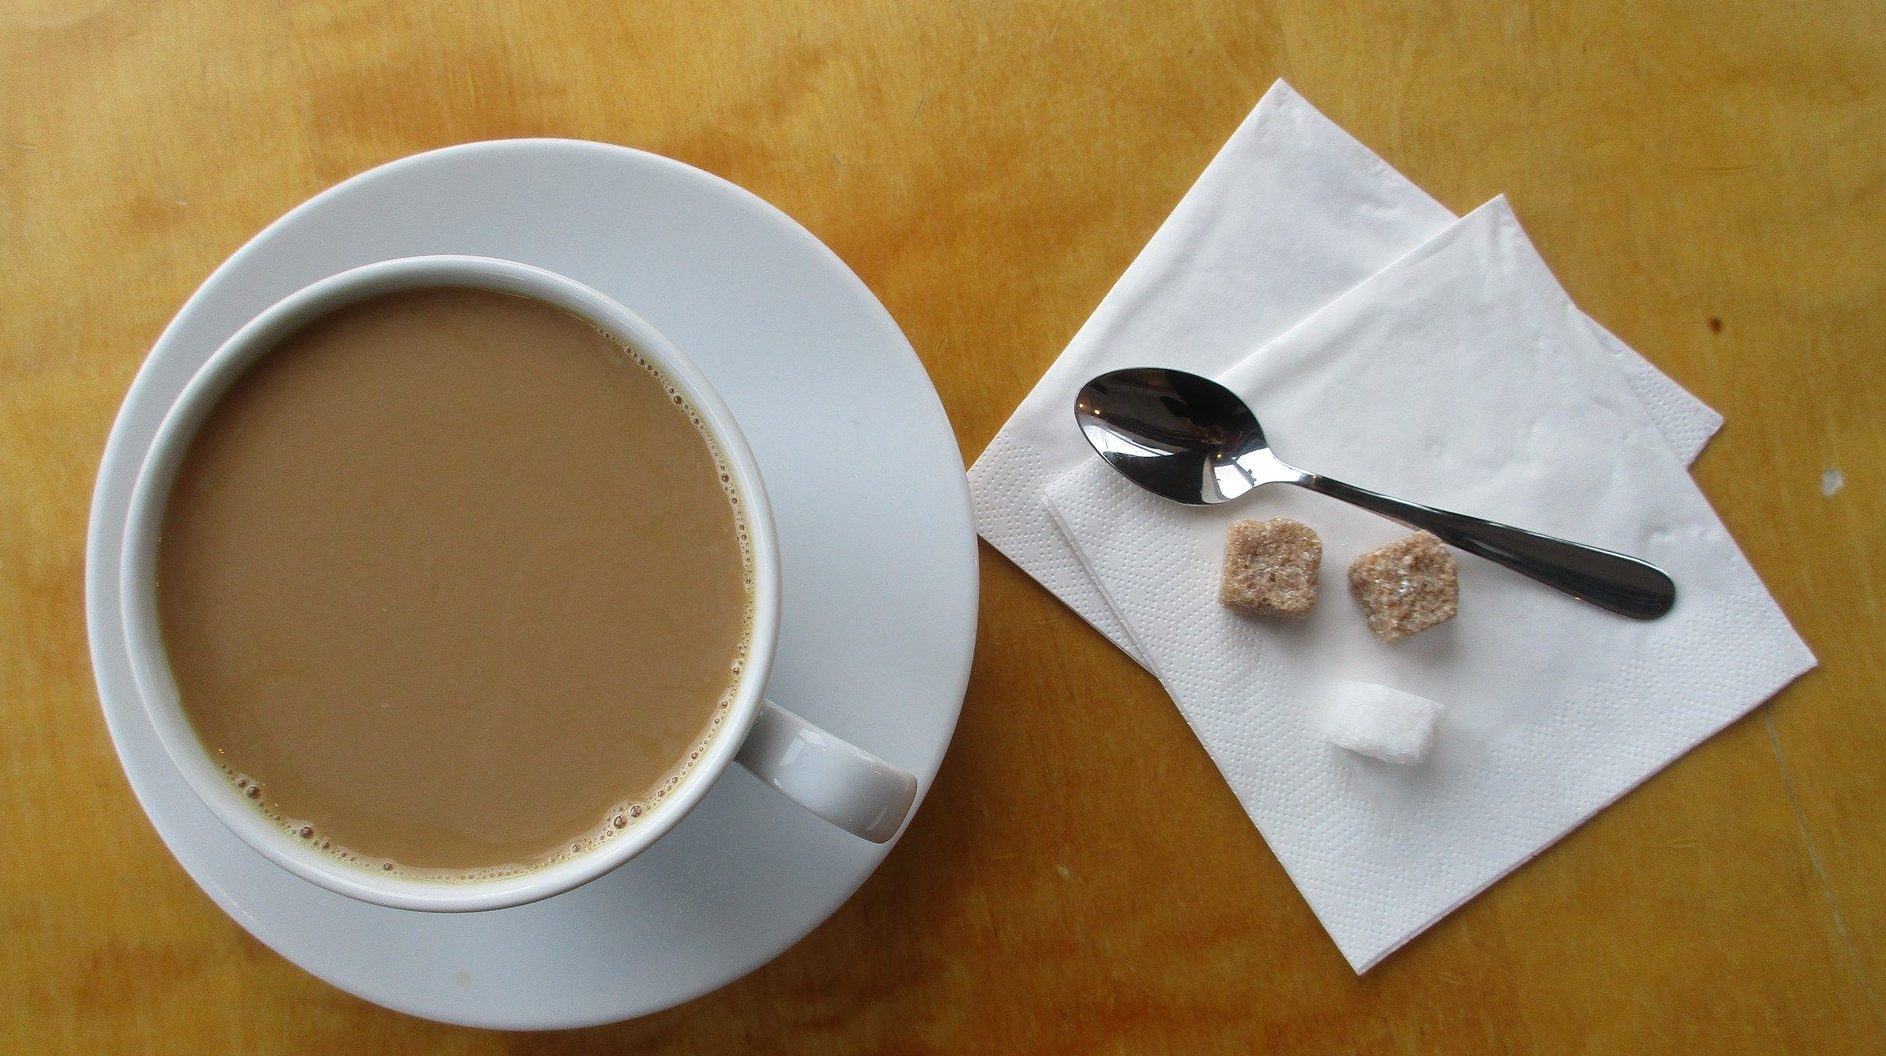 Café con leche, cómo hacerlo para que quede riquísimo ✓